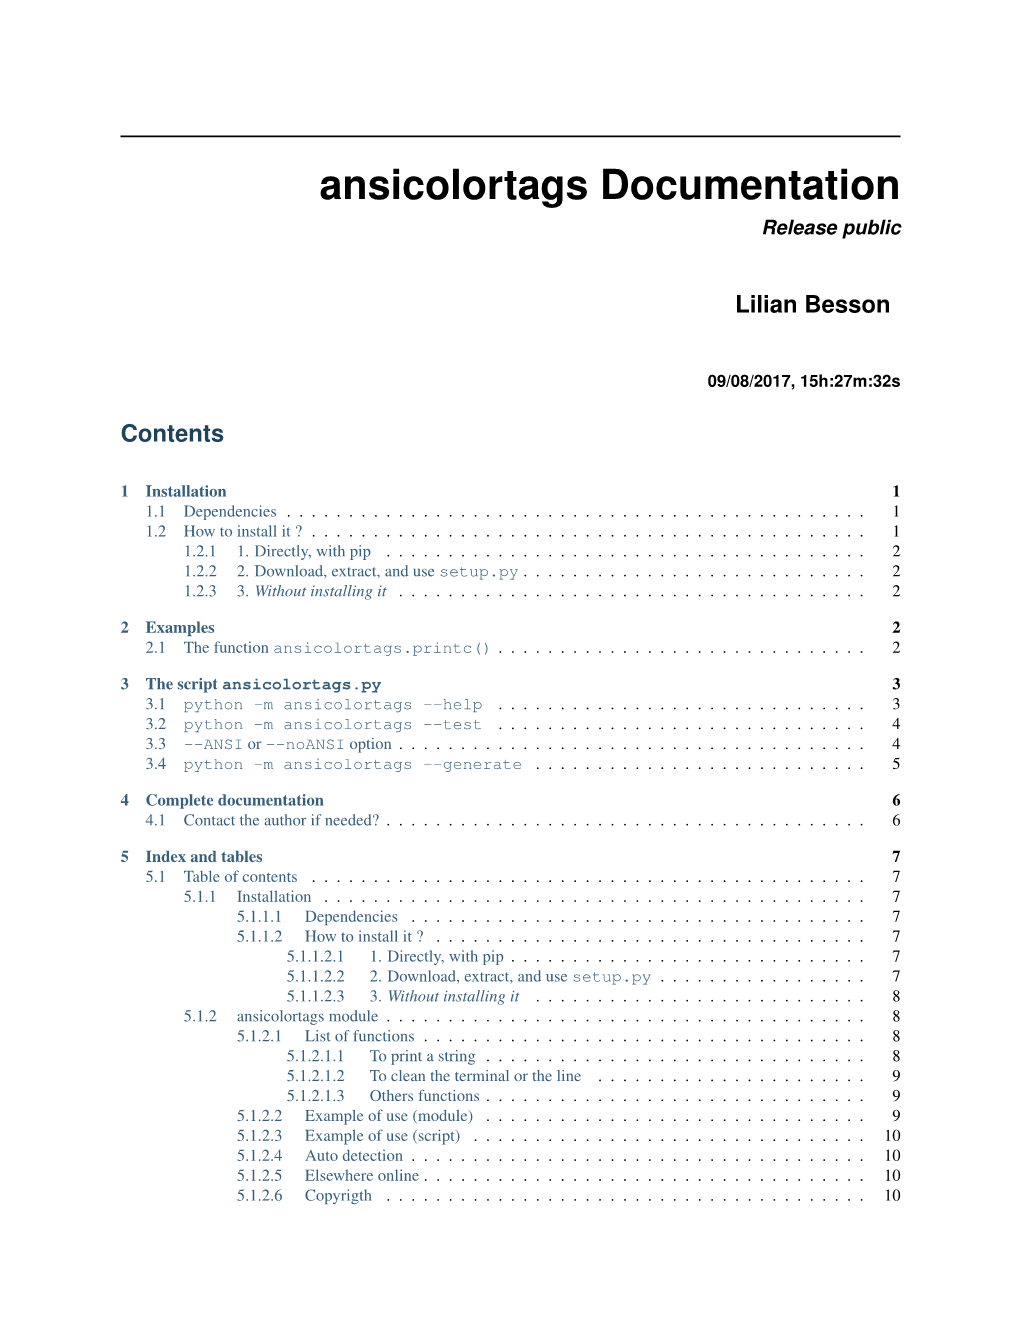 Ansicolortags Documentation Release Public